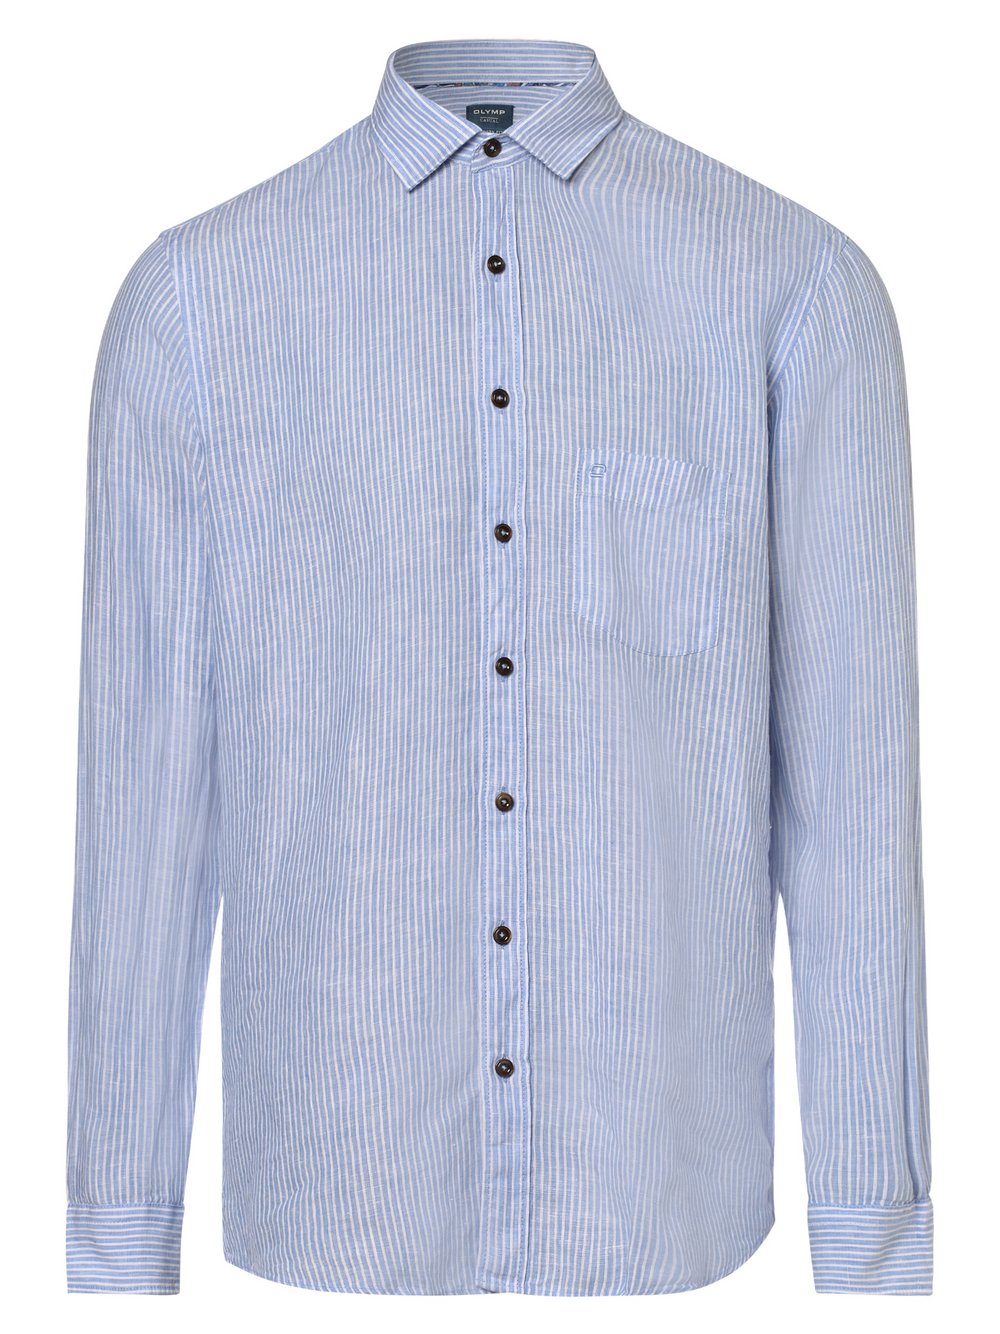 OLYMP Casual modern fit - Męska koszula lniana, niebieski